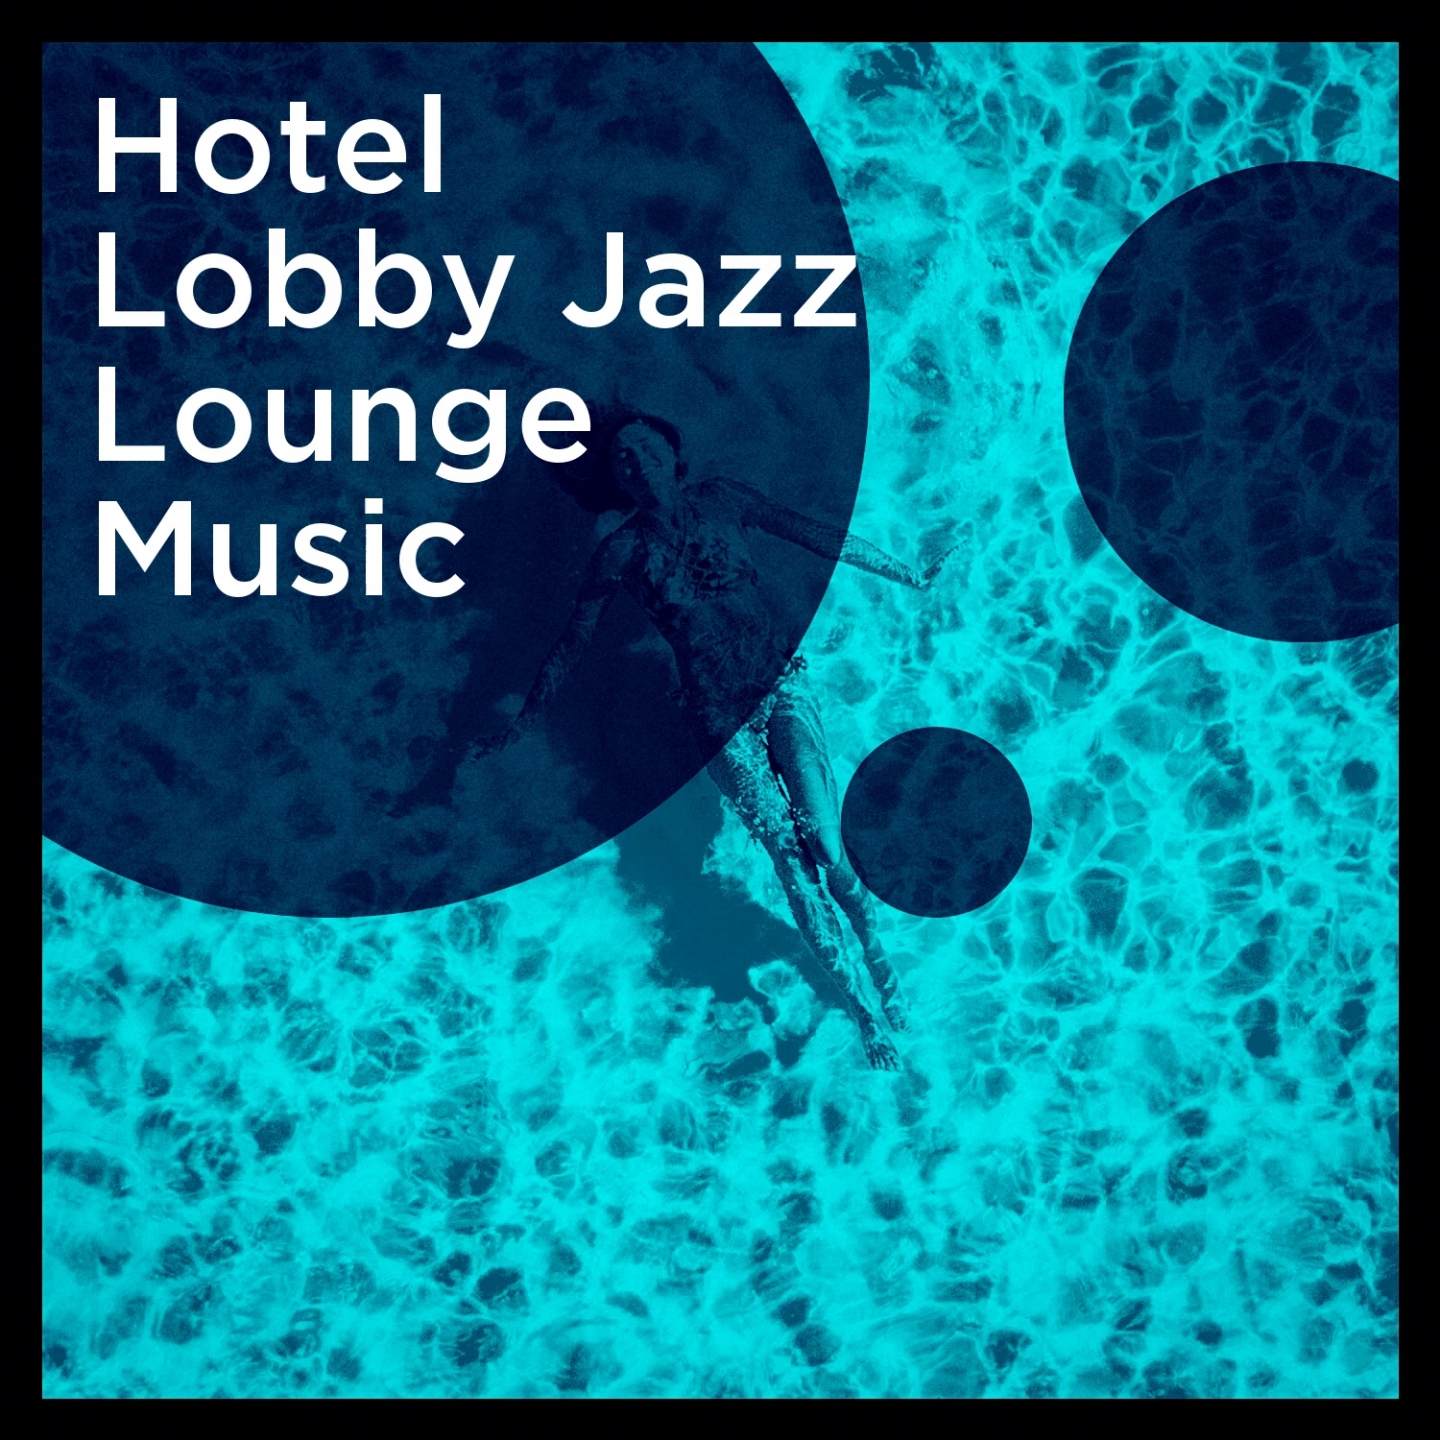 Hotel Lobby Jazz Lounge Music